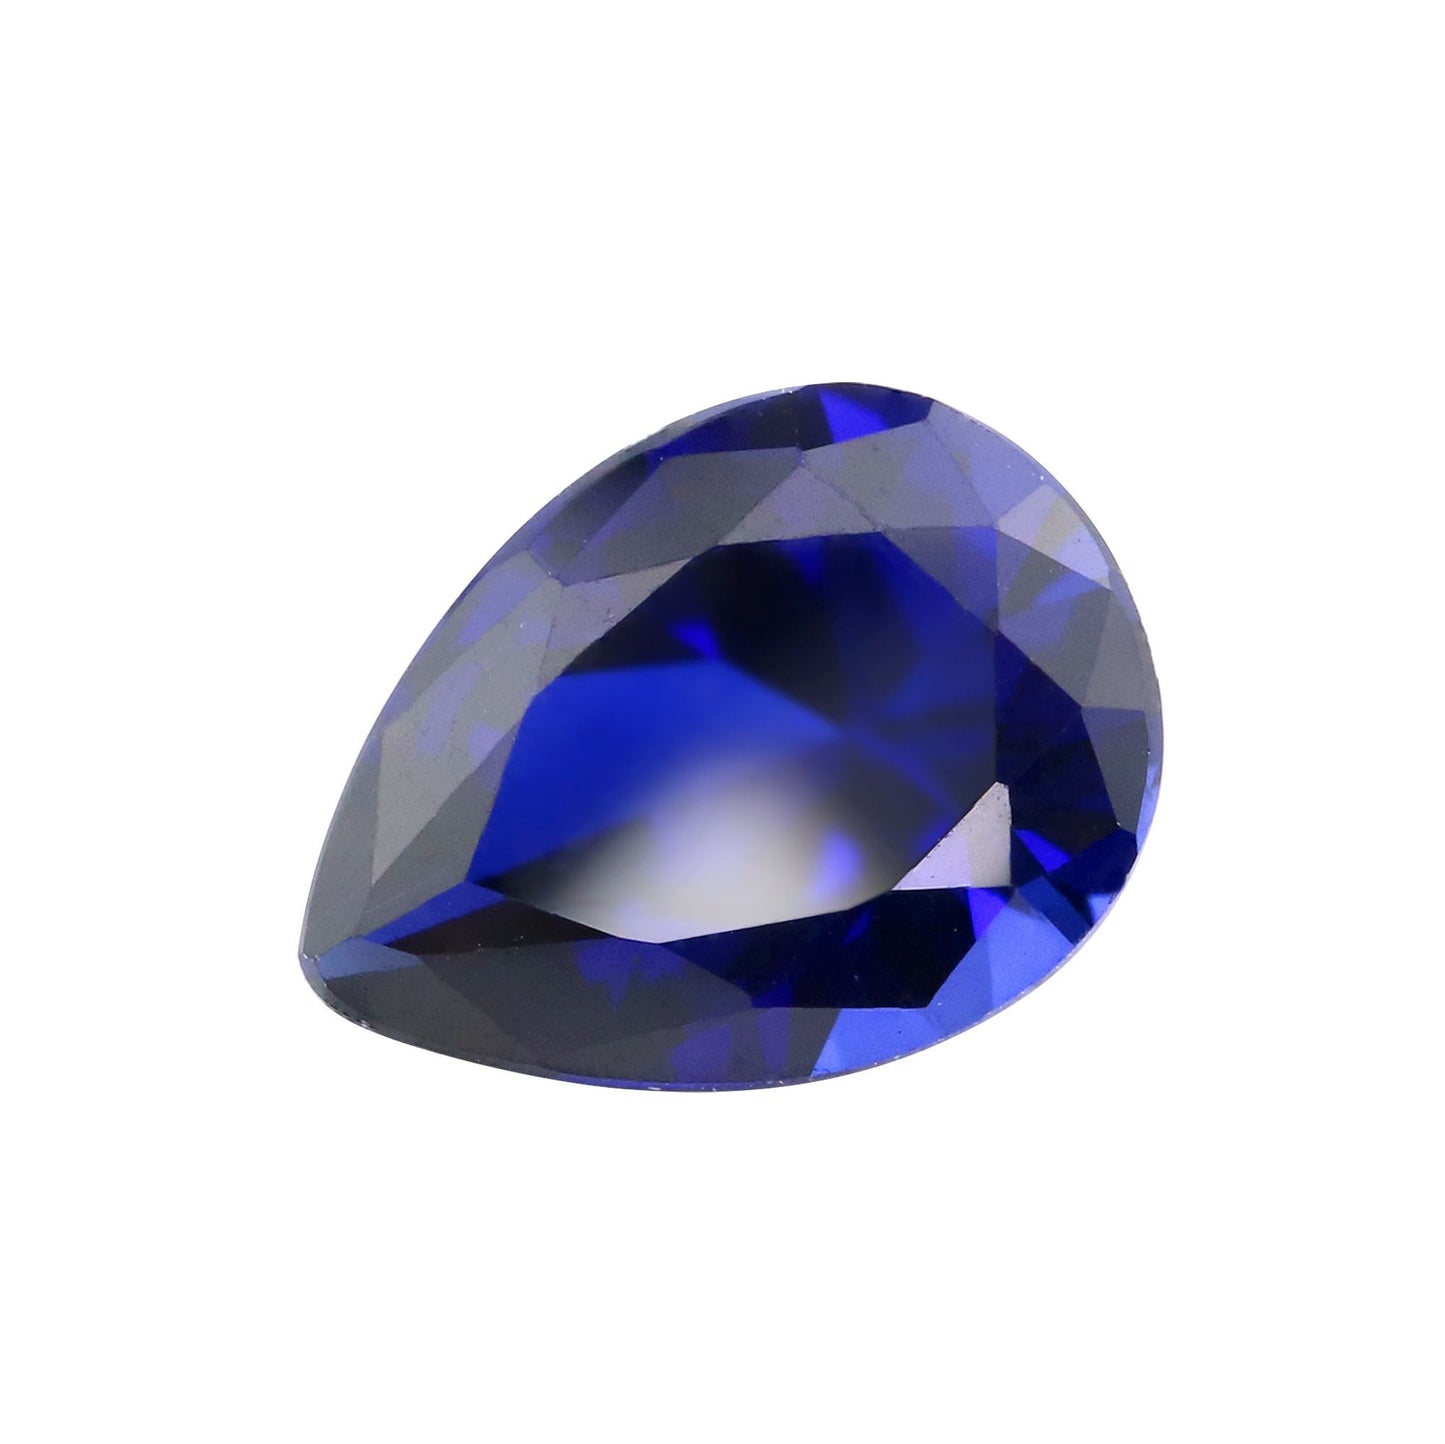 A tear drop cut dark blue lab created sapphire.